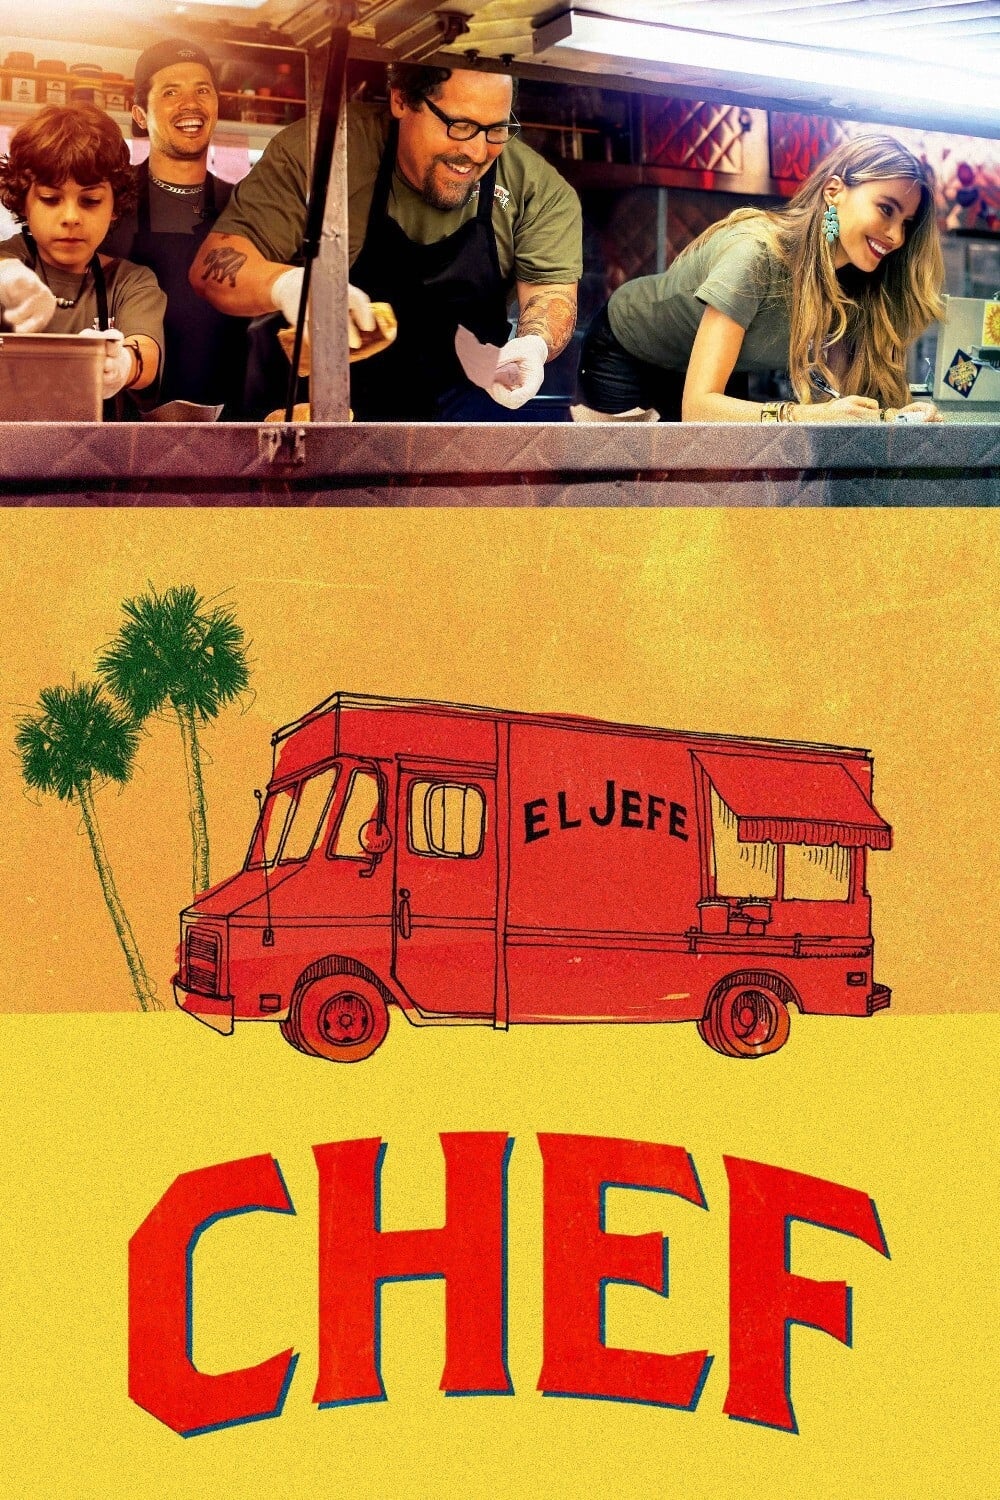 Chef movie poster